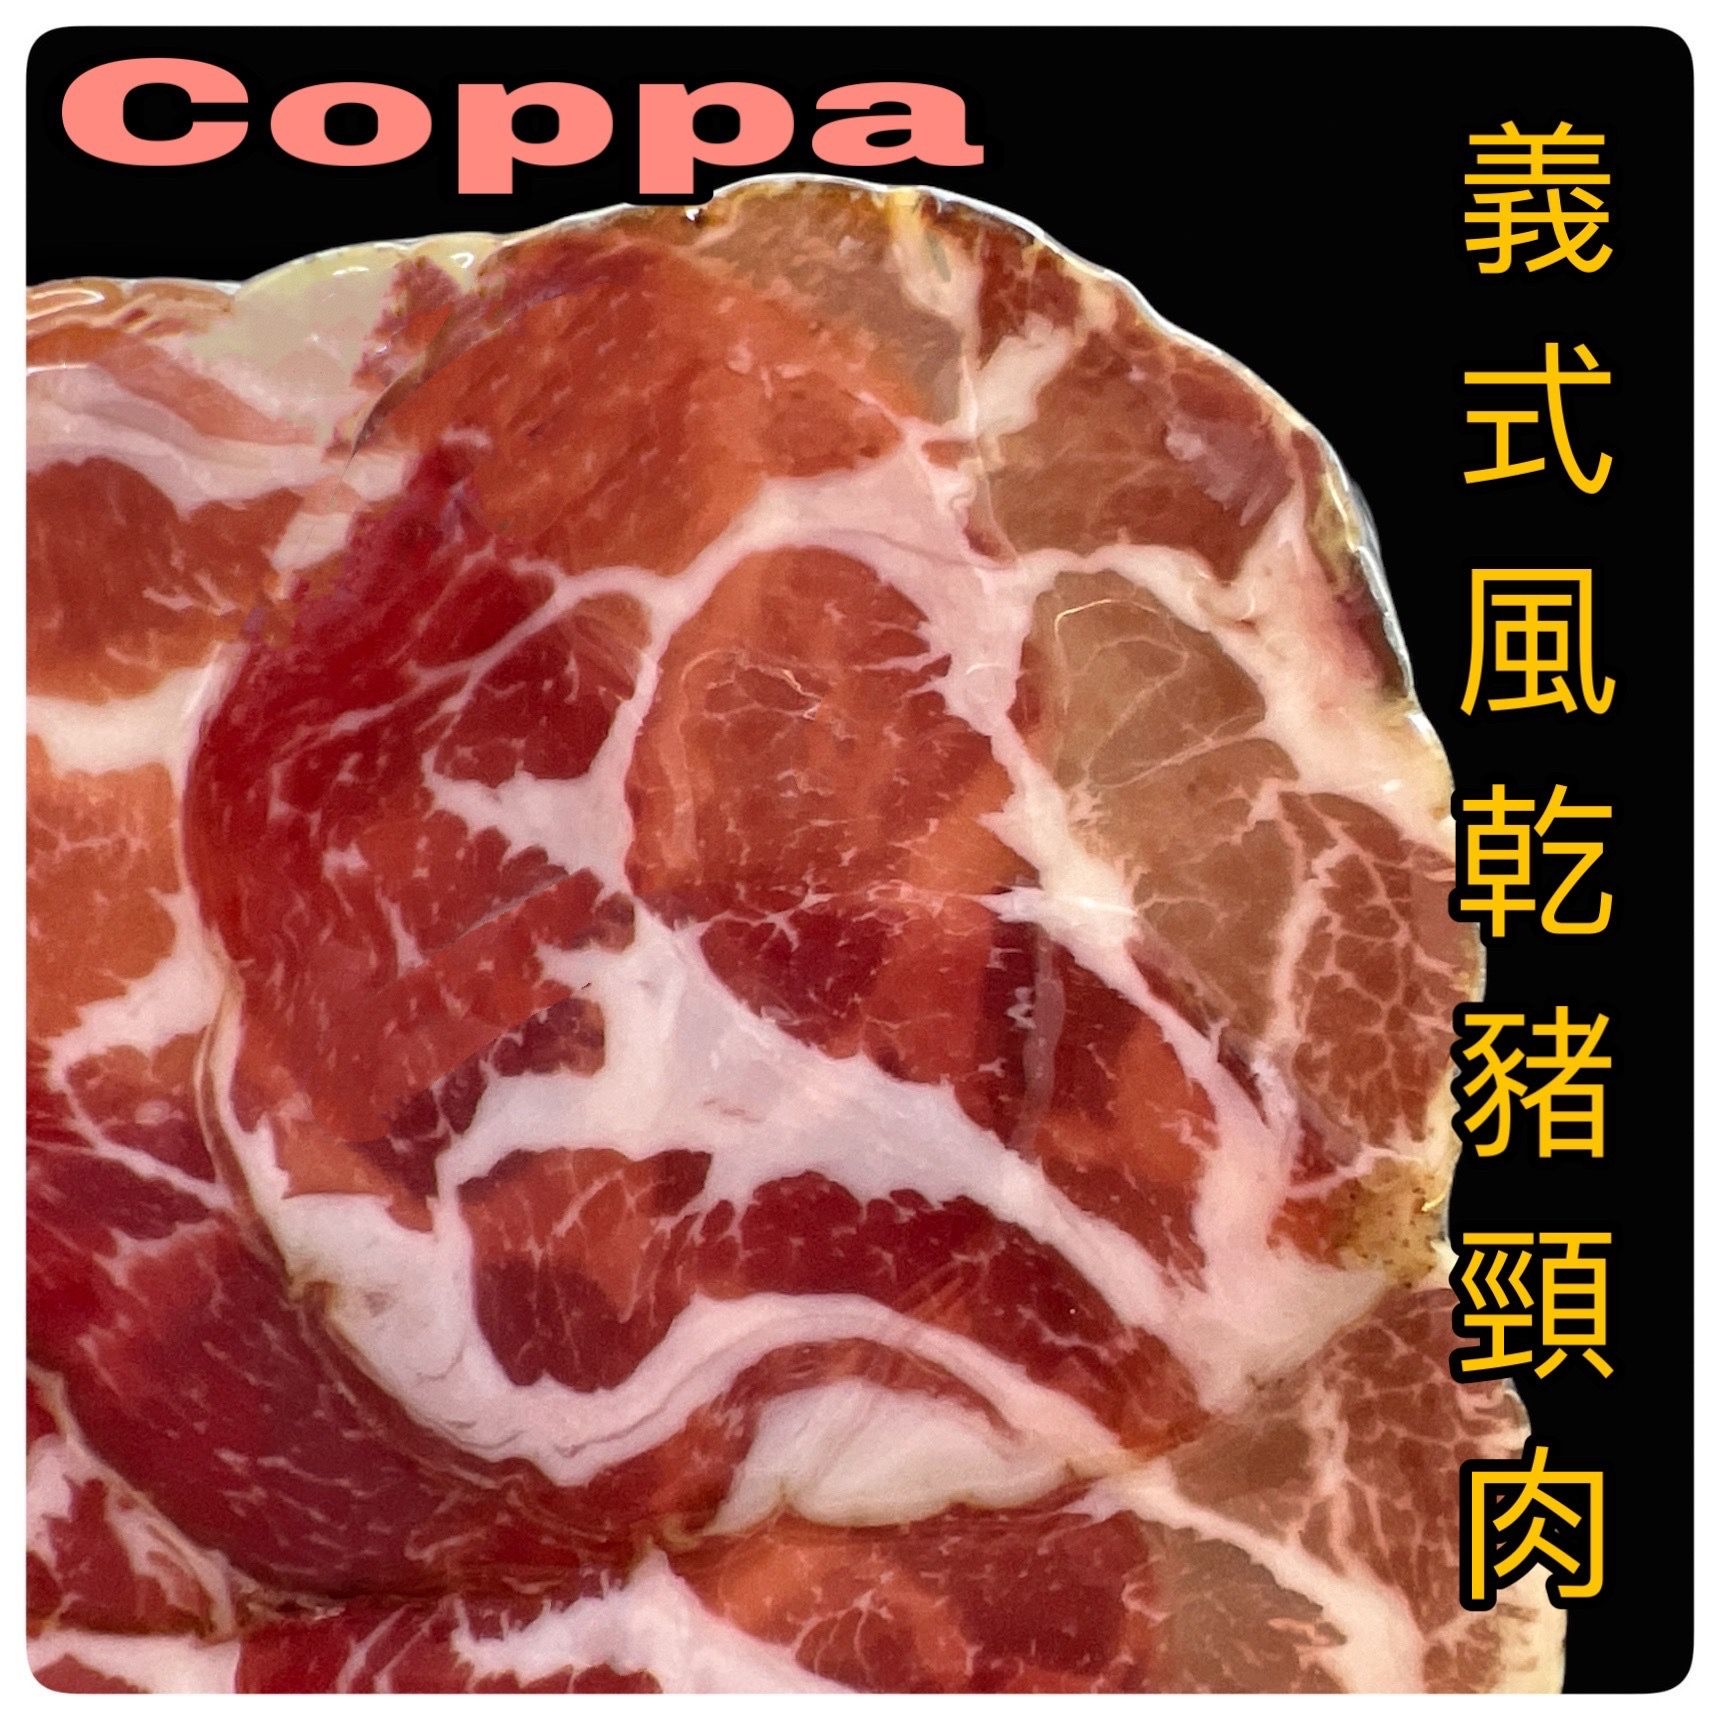 Coppa義式風乾豬頸肉， 👆🏼👆🏼👆🏼點照片看內容